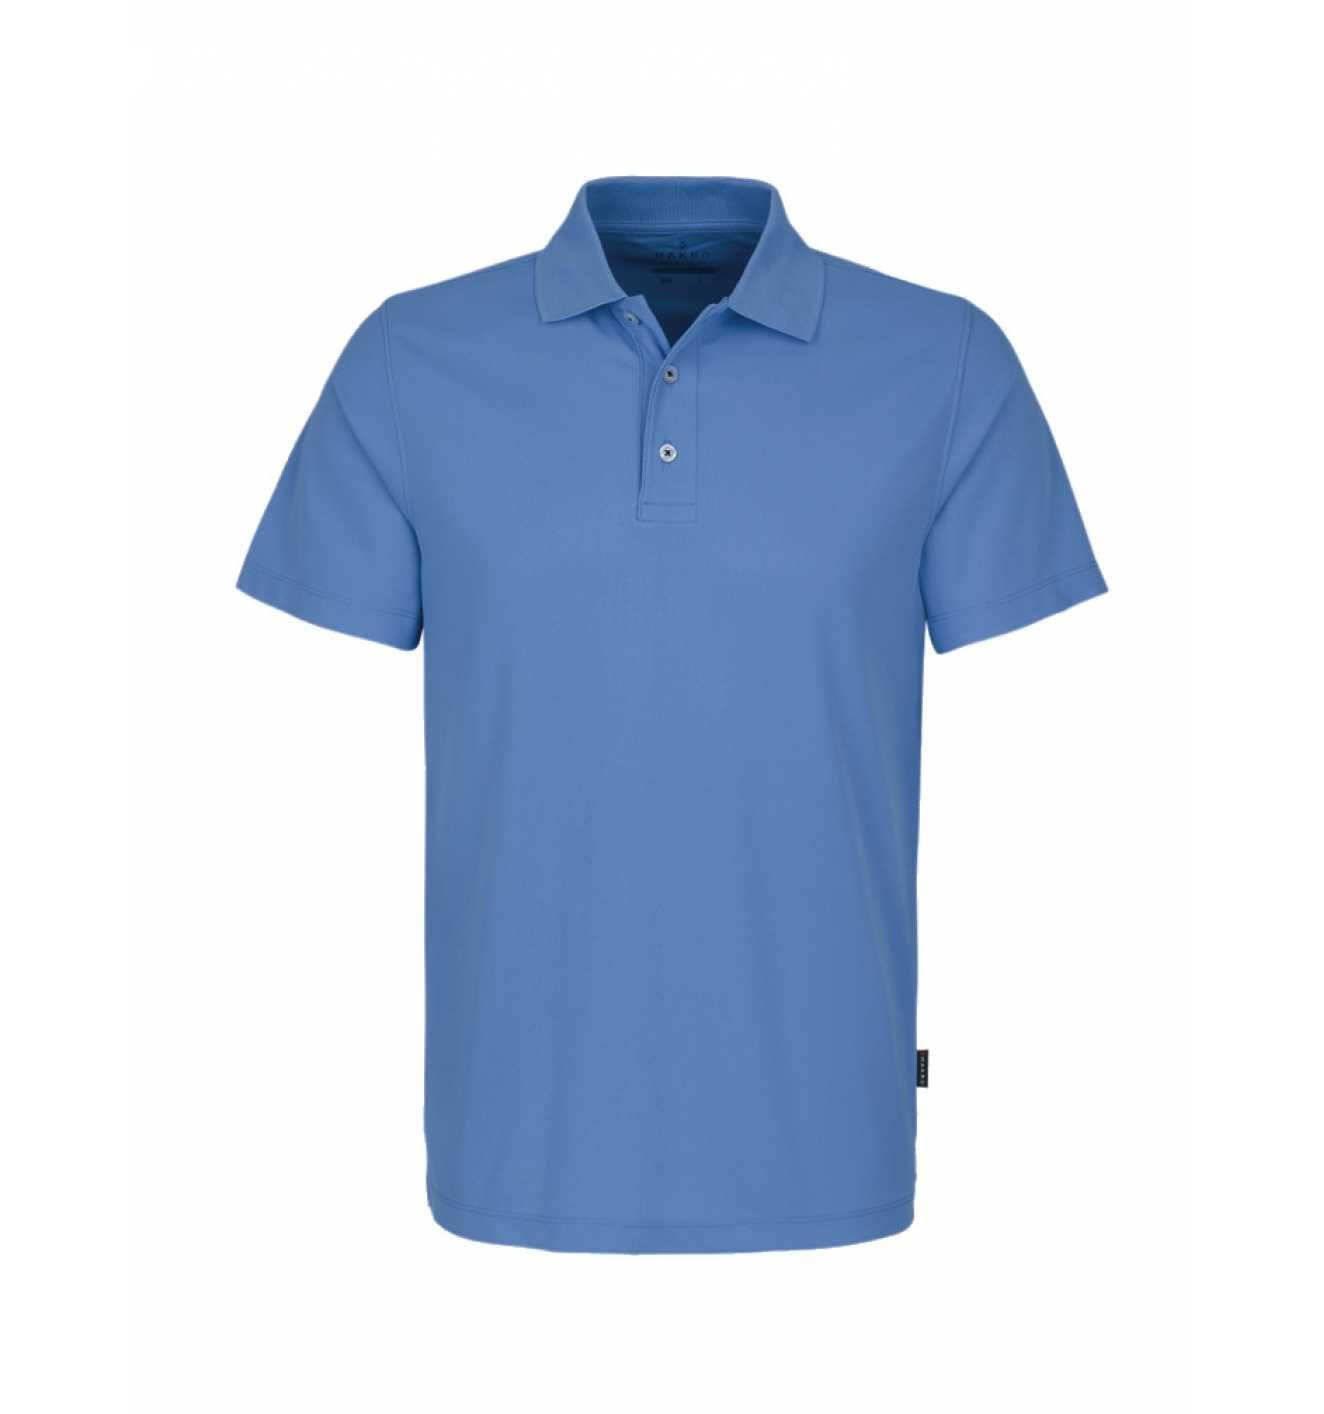 Hakro Poloshirt Coolmax #806 Herren (Kein Set, 1-tlg., 1er-Pack) sportlich körpernah geschnitten malibu-blau